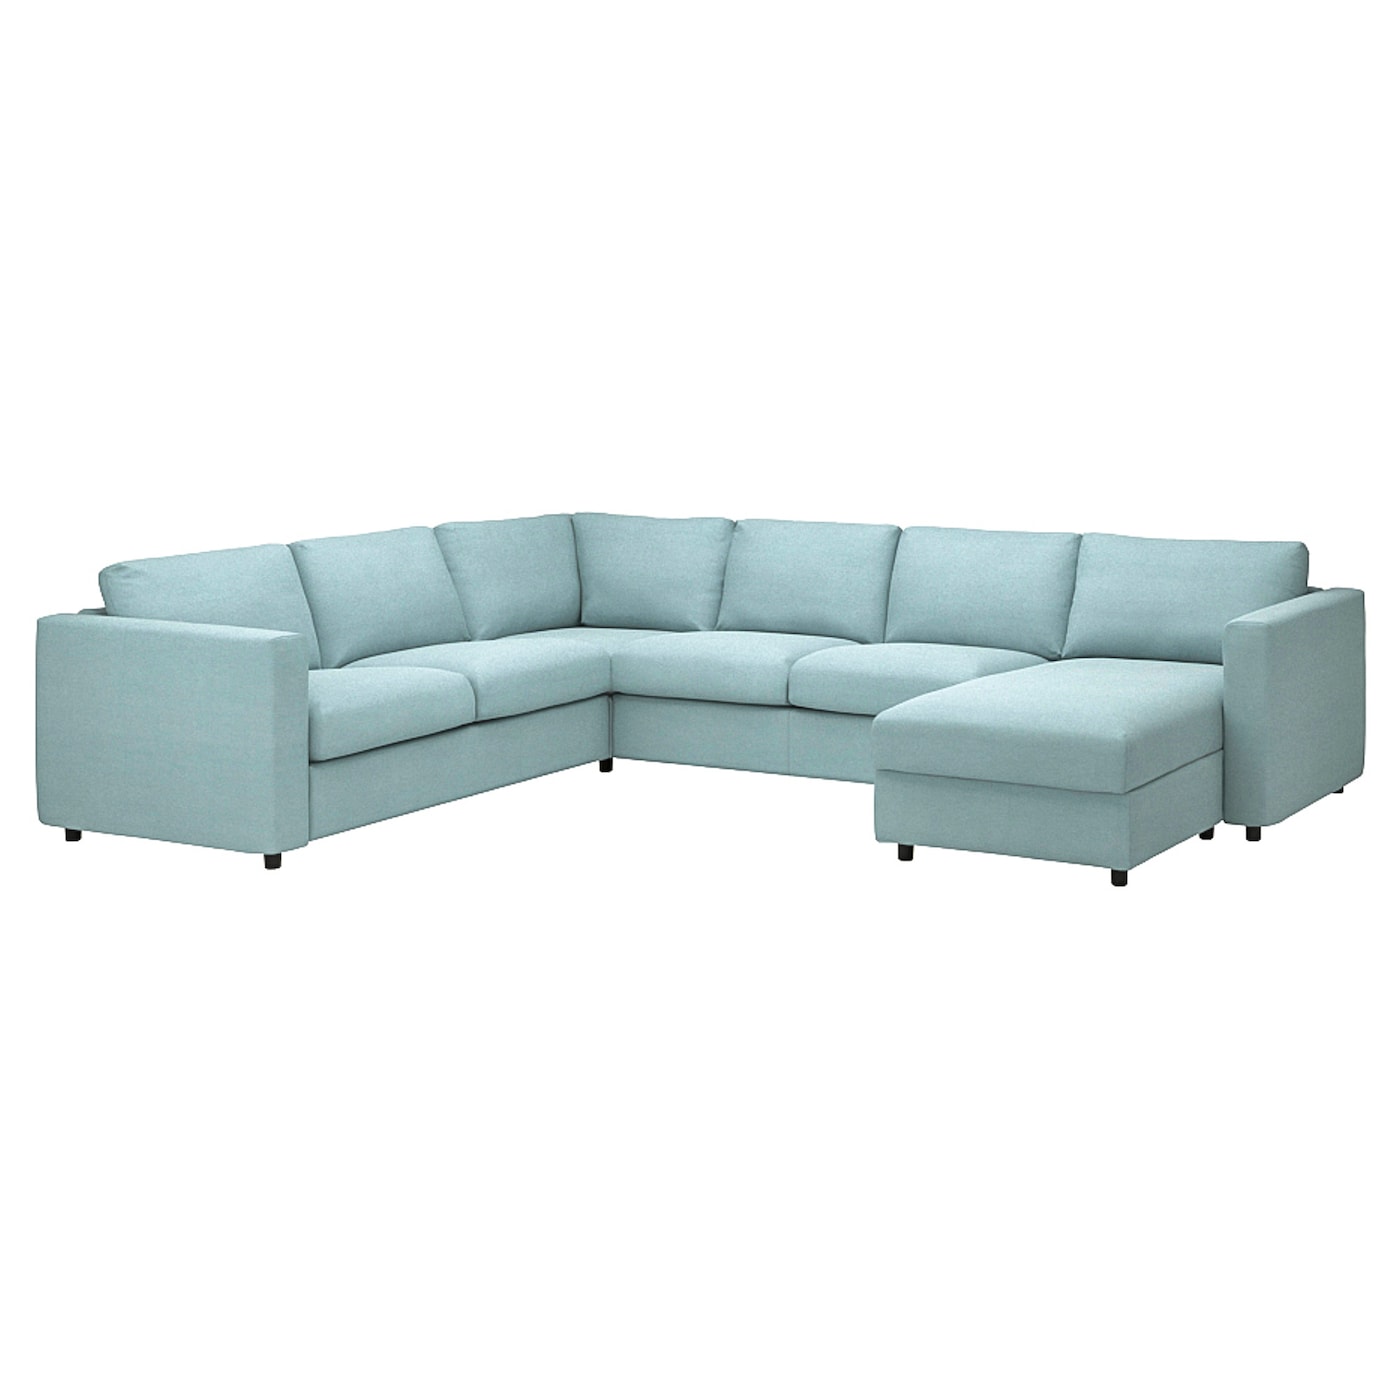 ВИМЛЕ Диван угловой, 5-местный. диван+диван, с диваном/Saxemara светло-синий VIMLE IKEA диван угловой bizzotto 0662861